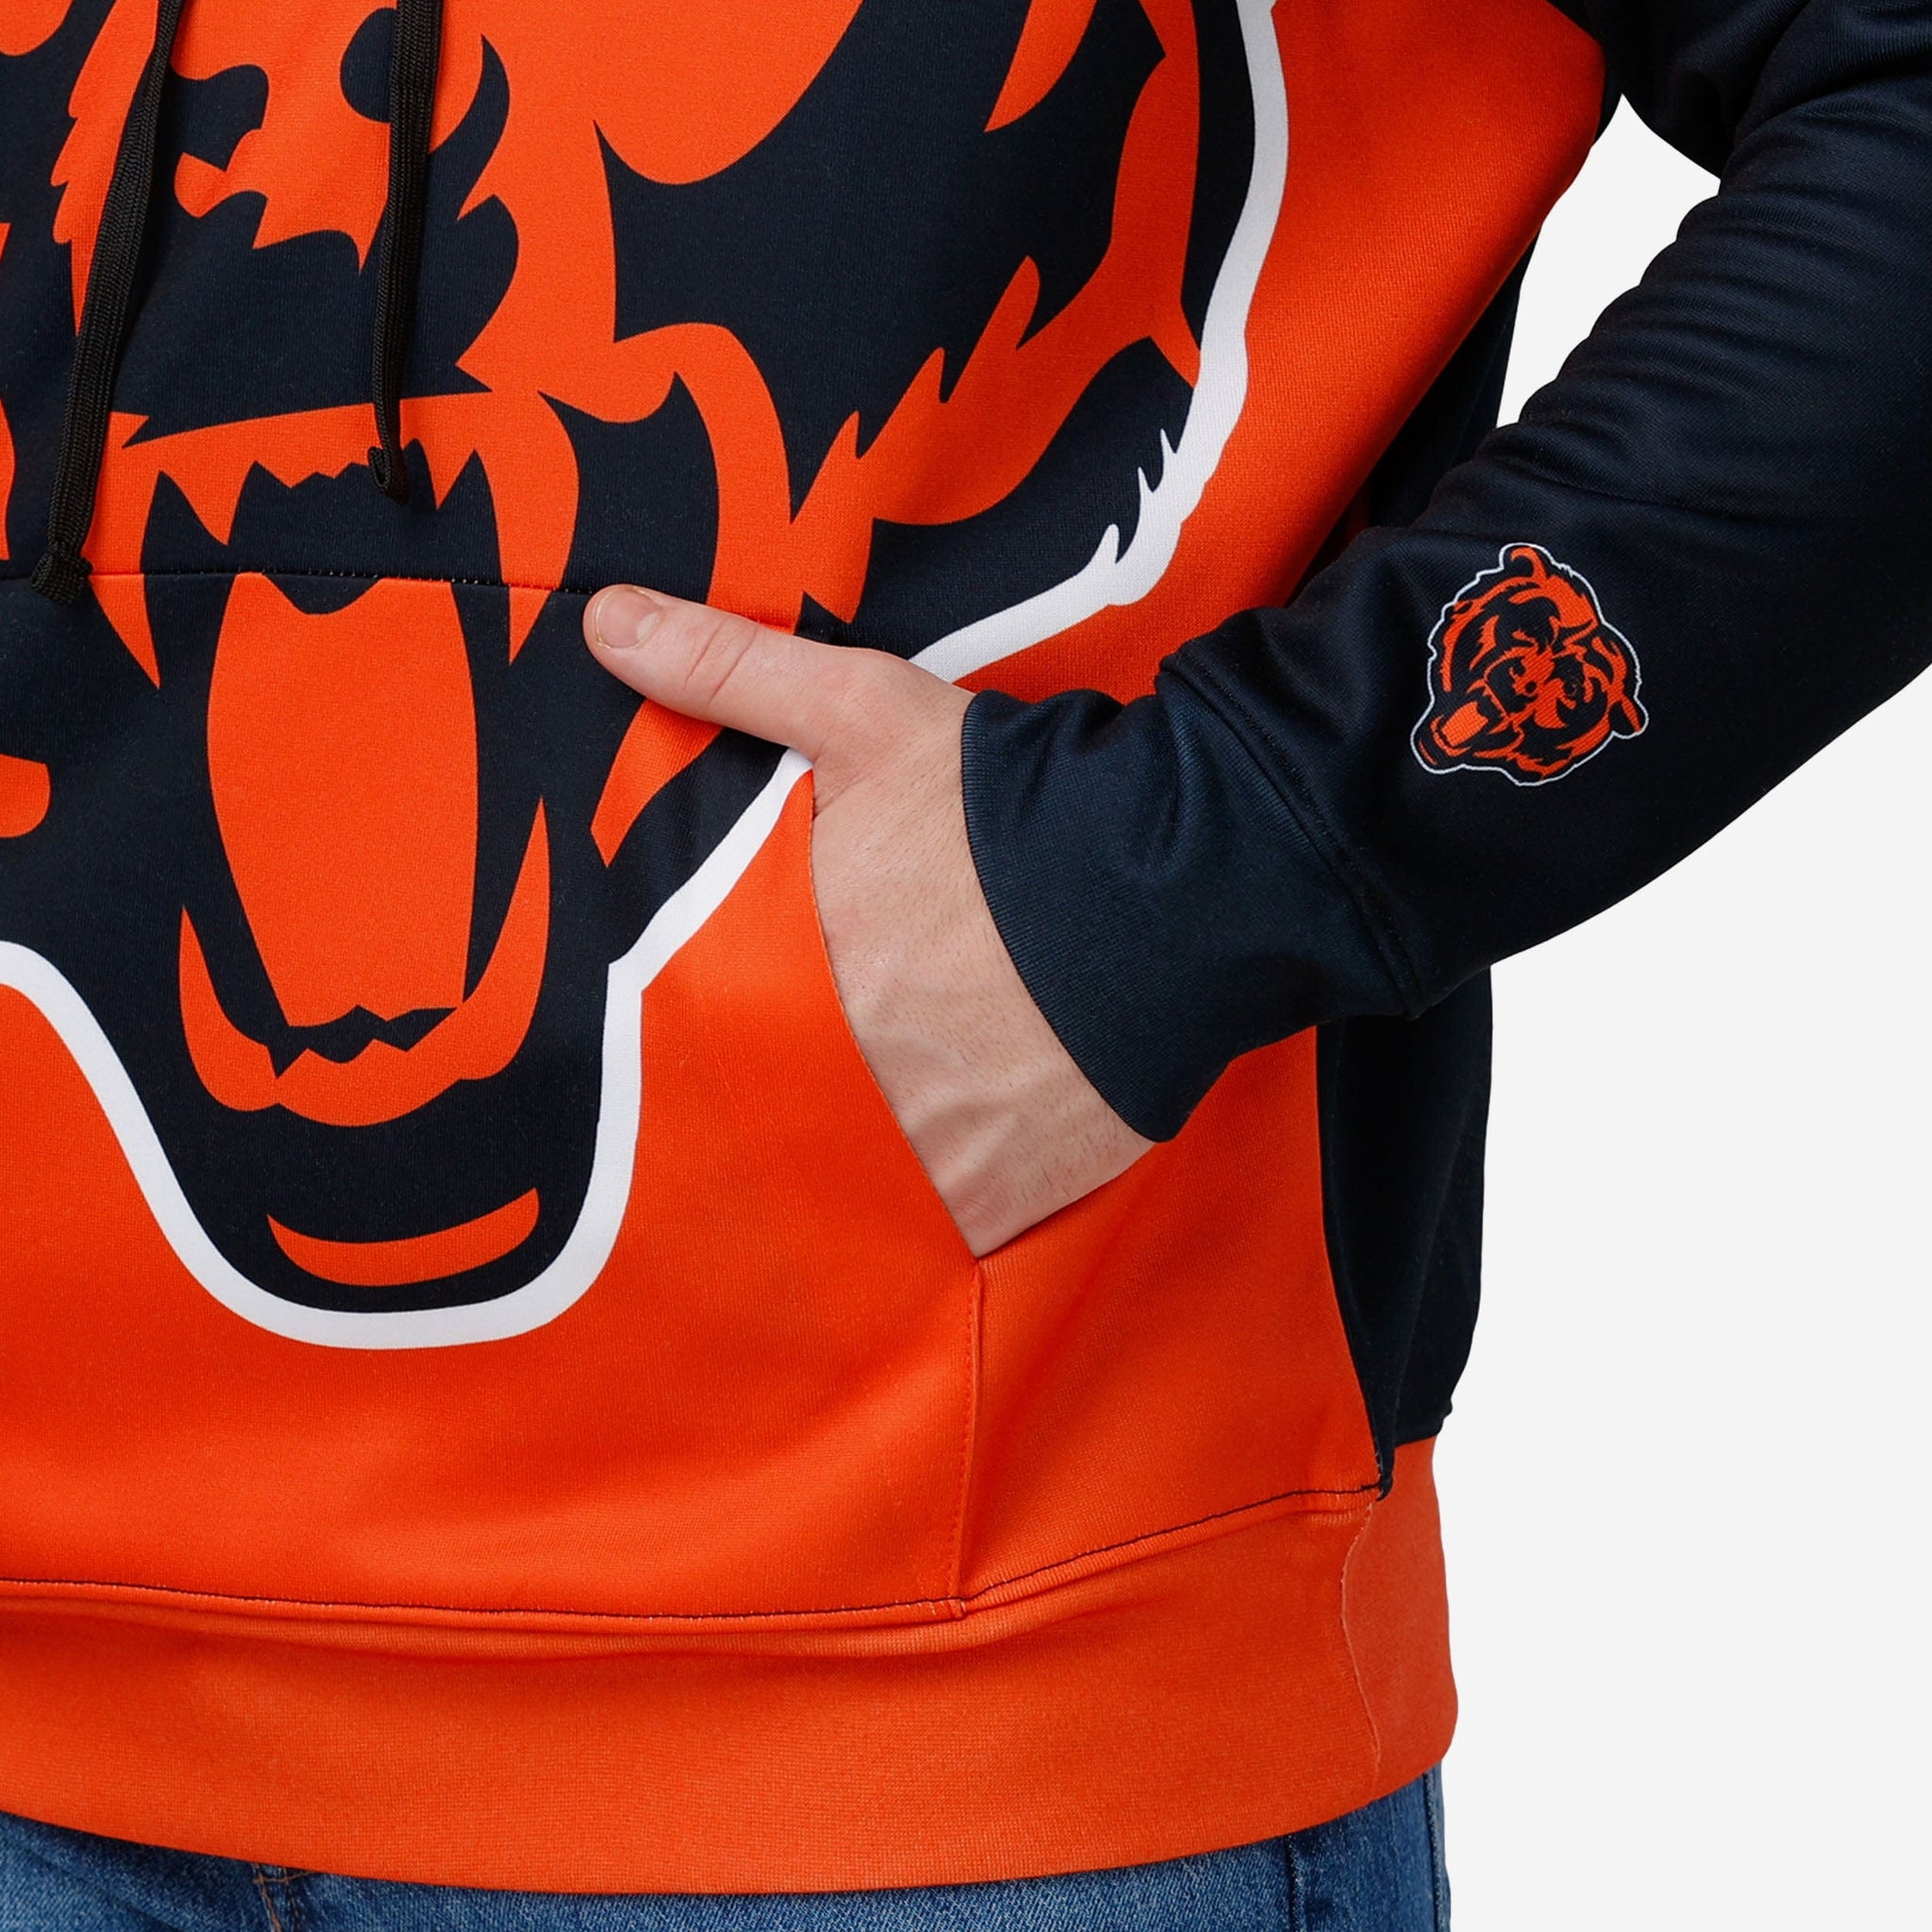 Stay warm, stay loyal. These Toronto Raptors sweatshirts are sure